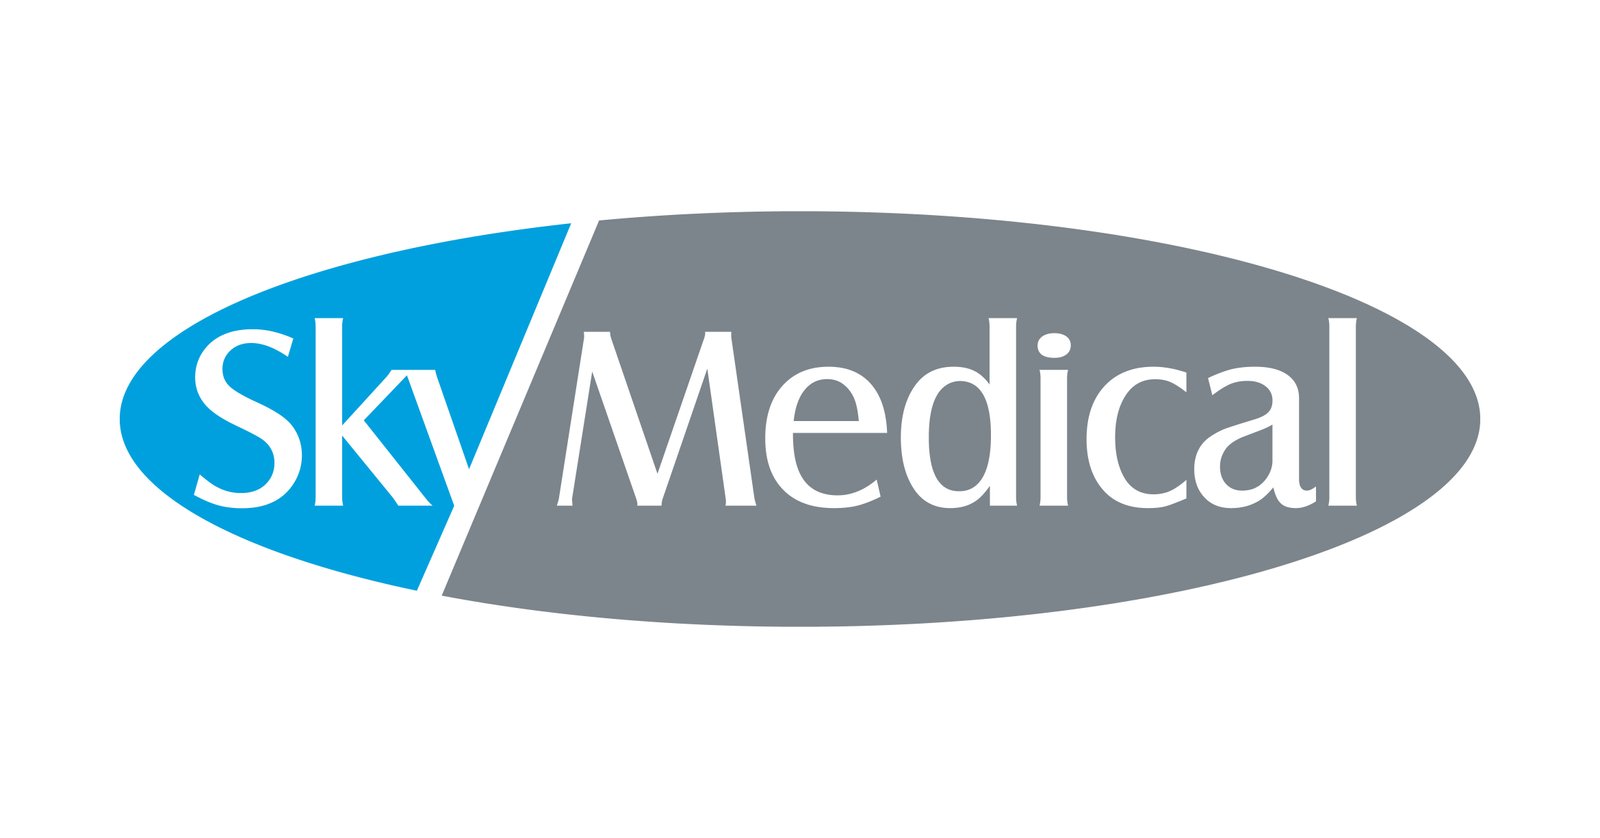 Sky Medical